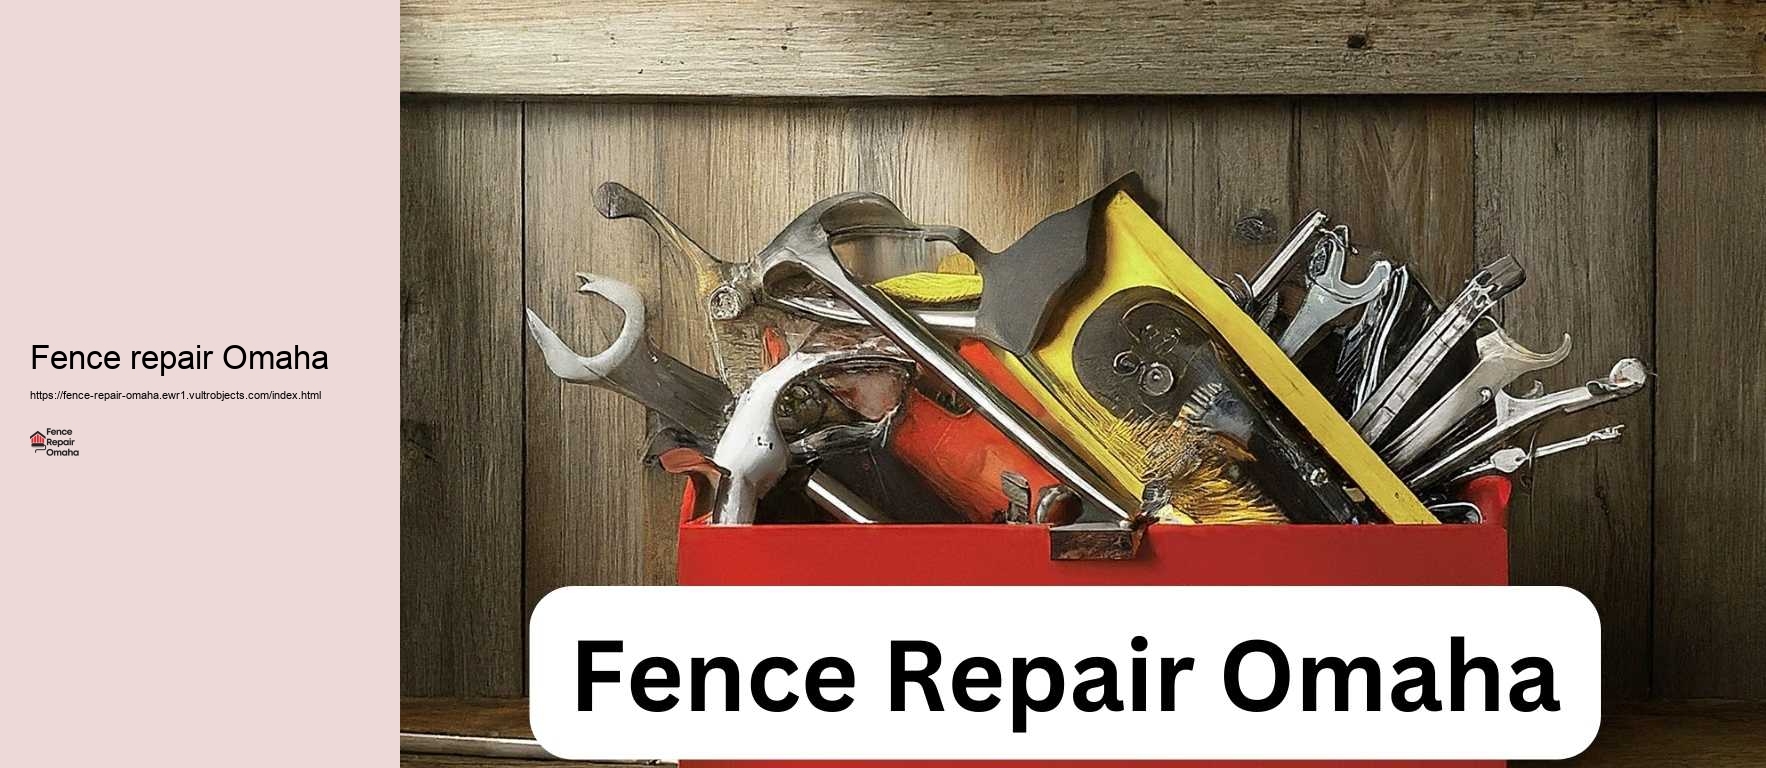 Fence repair Omaha